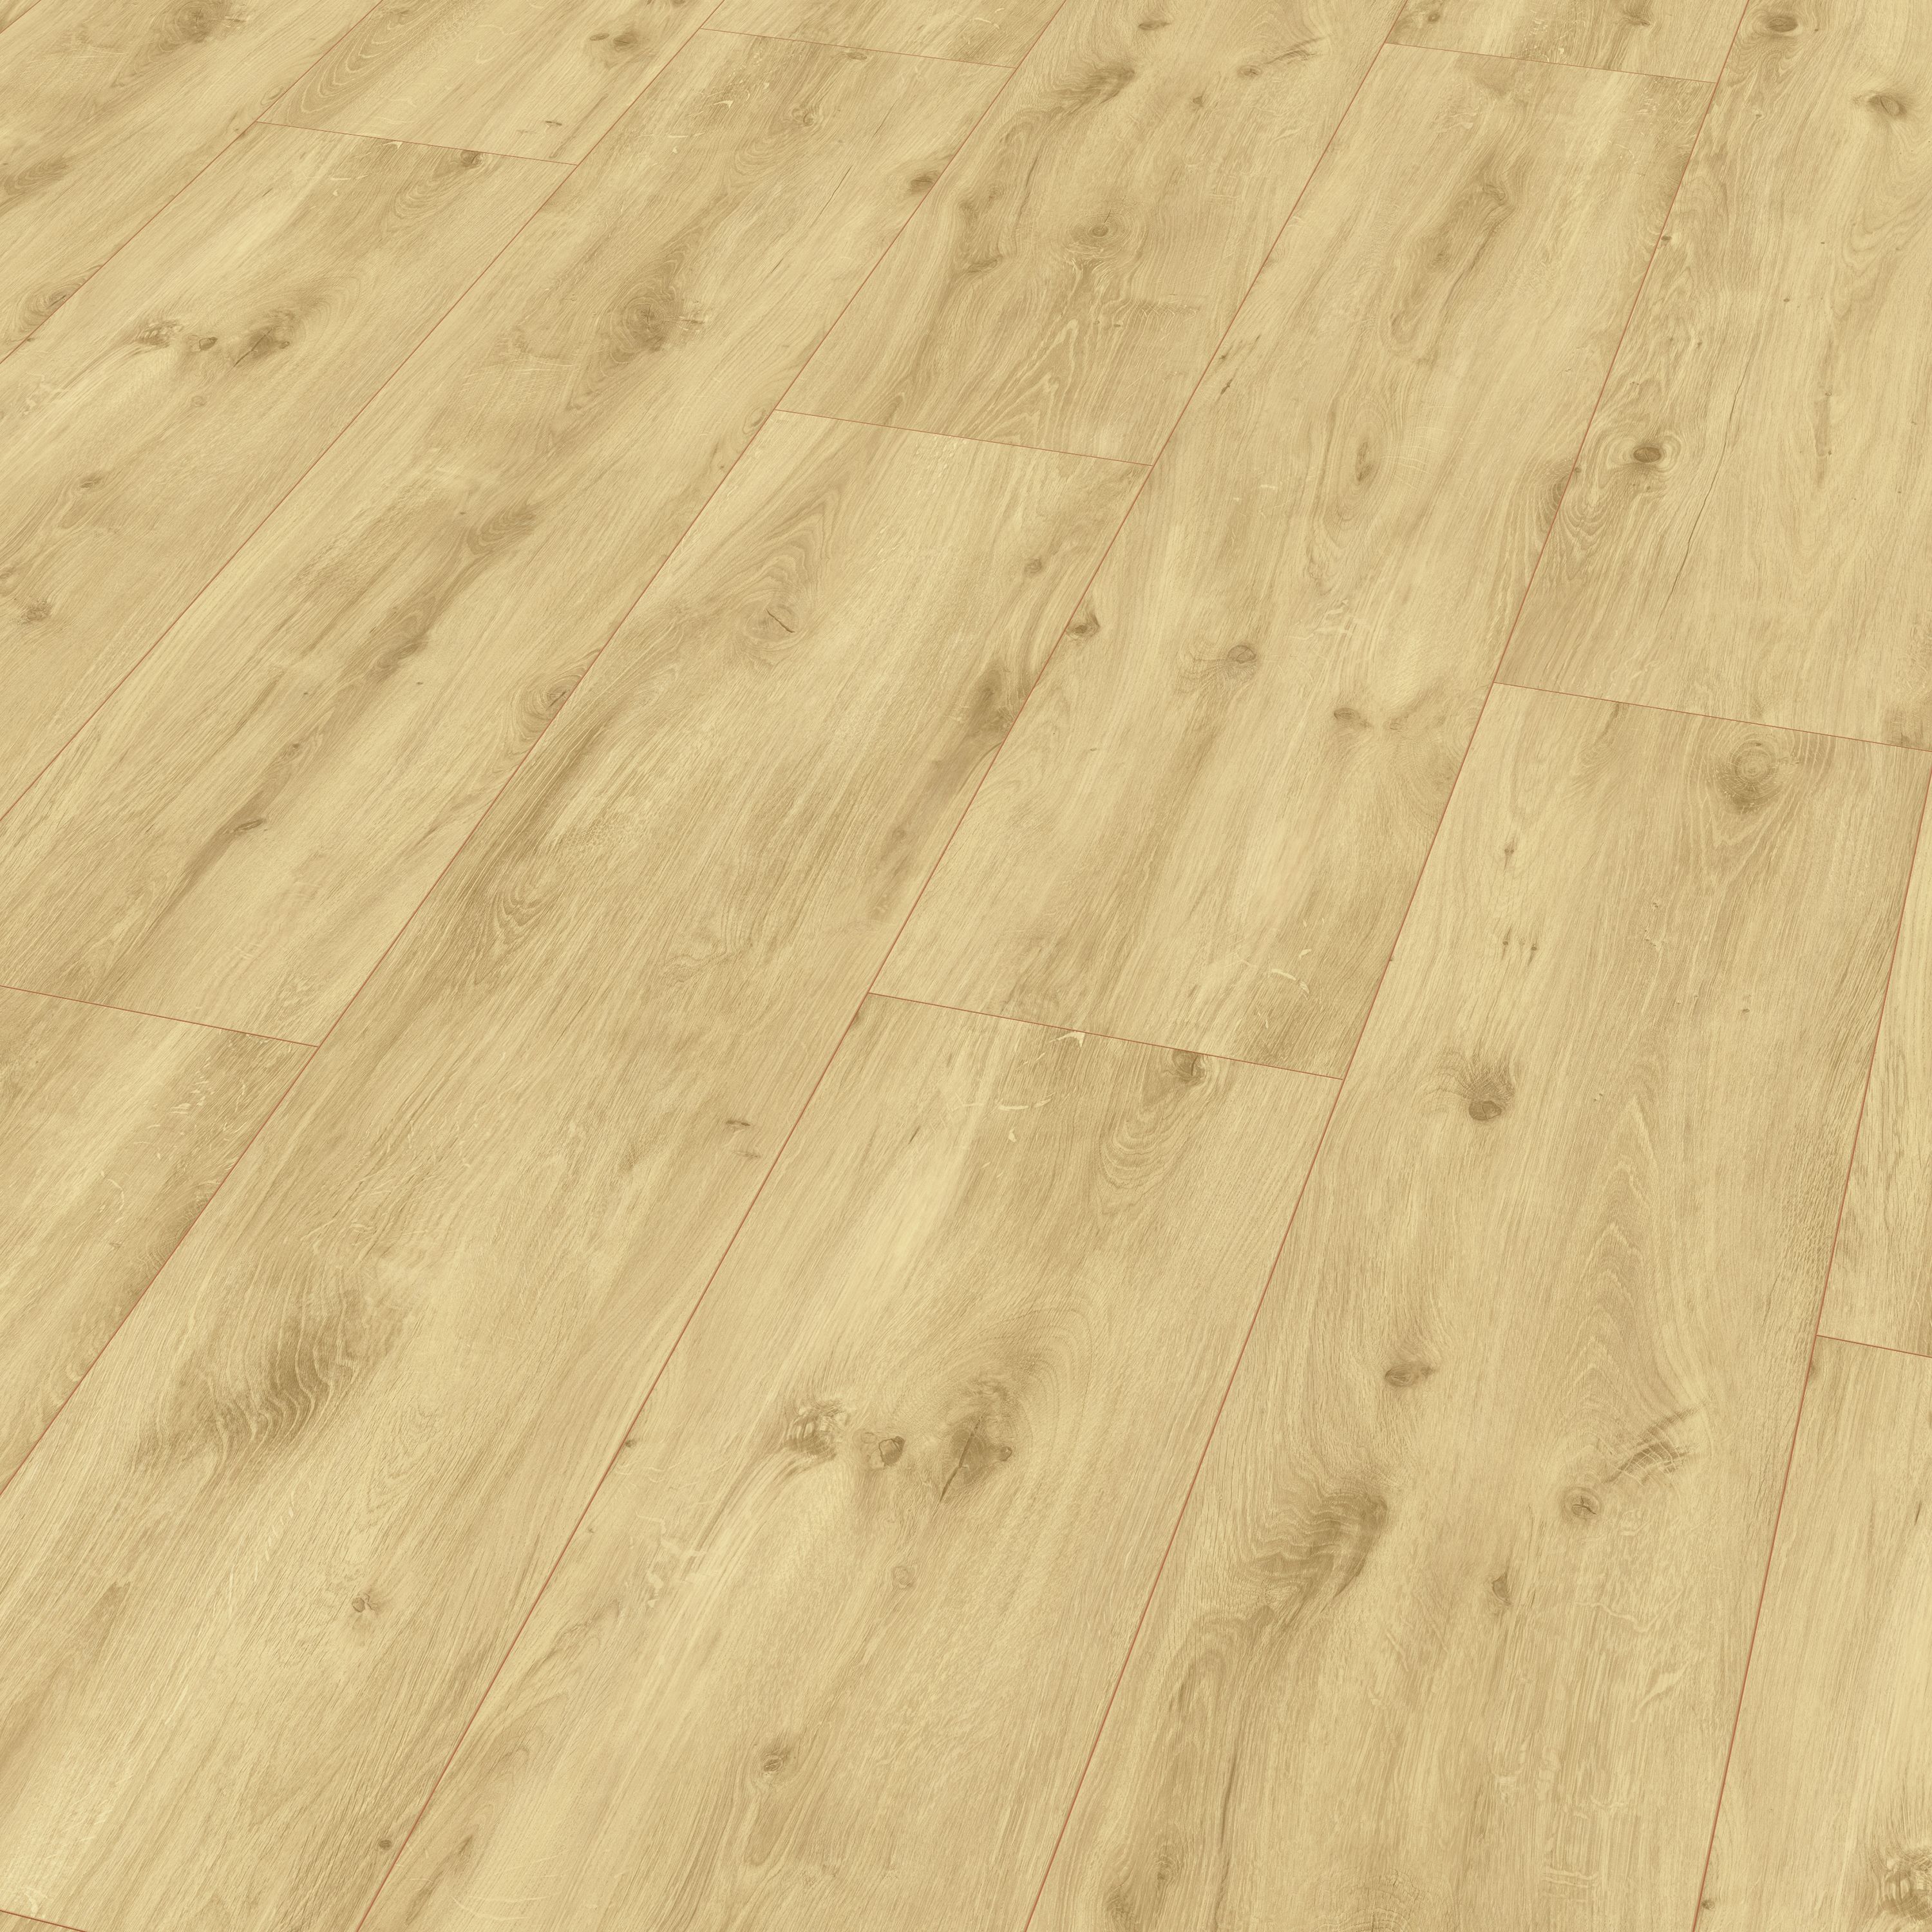 GoodHome Lulea Authentic Natural Wood effect Laminate Flooring, 2.54m²